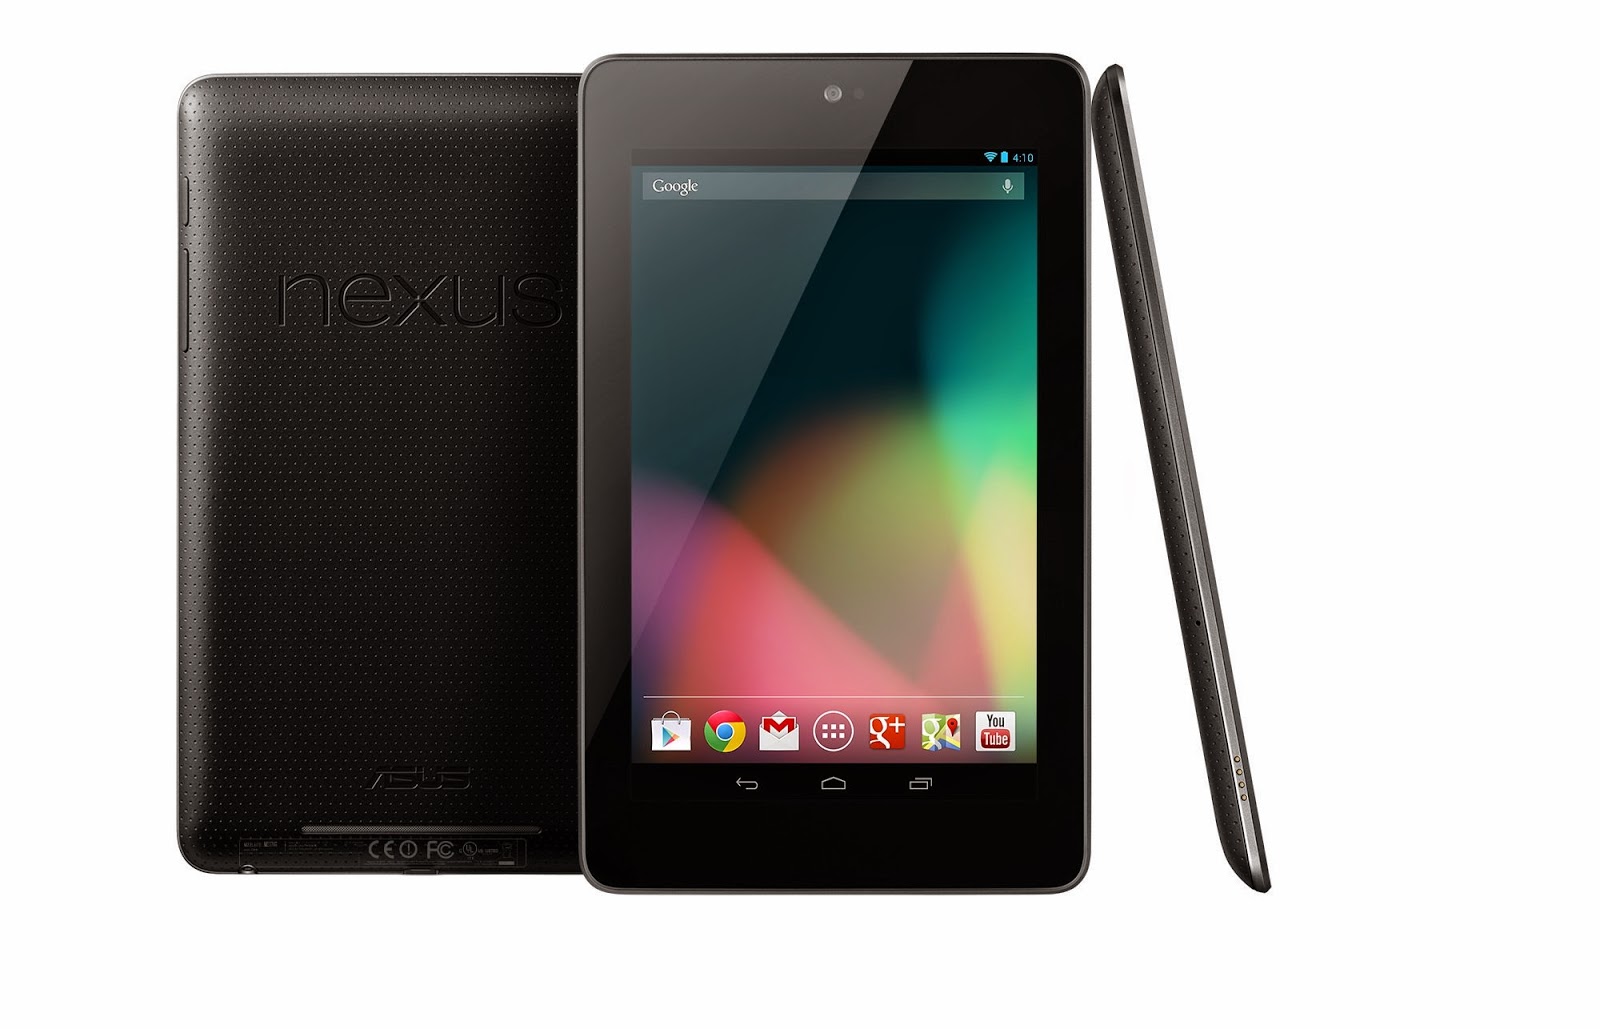 Upgrade Nexus 7 to Android 4.4.4 KitKat